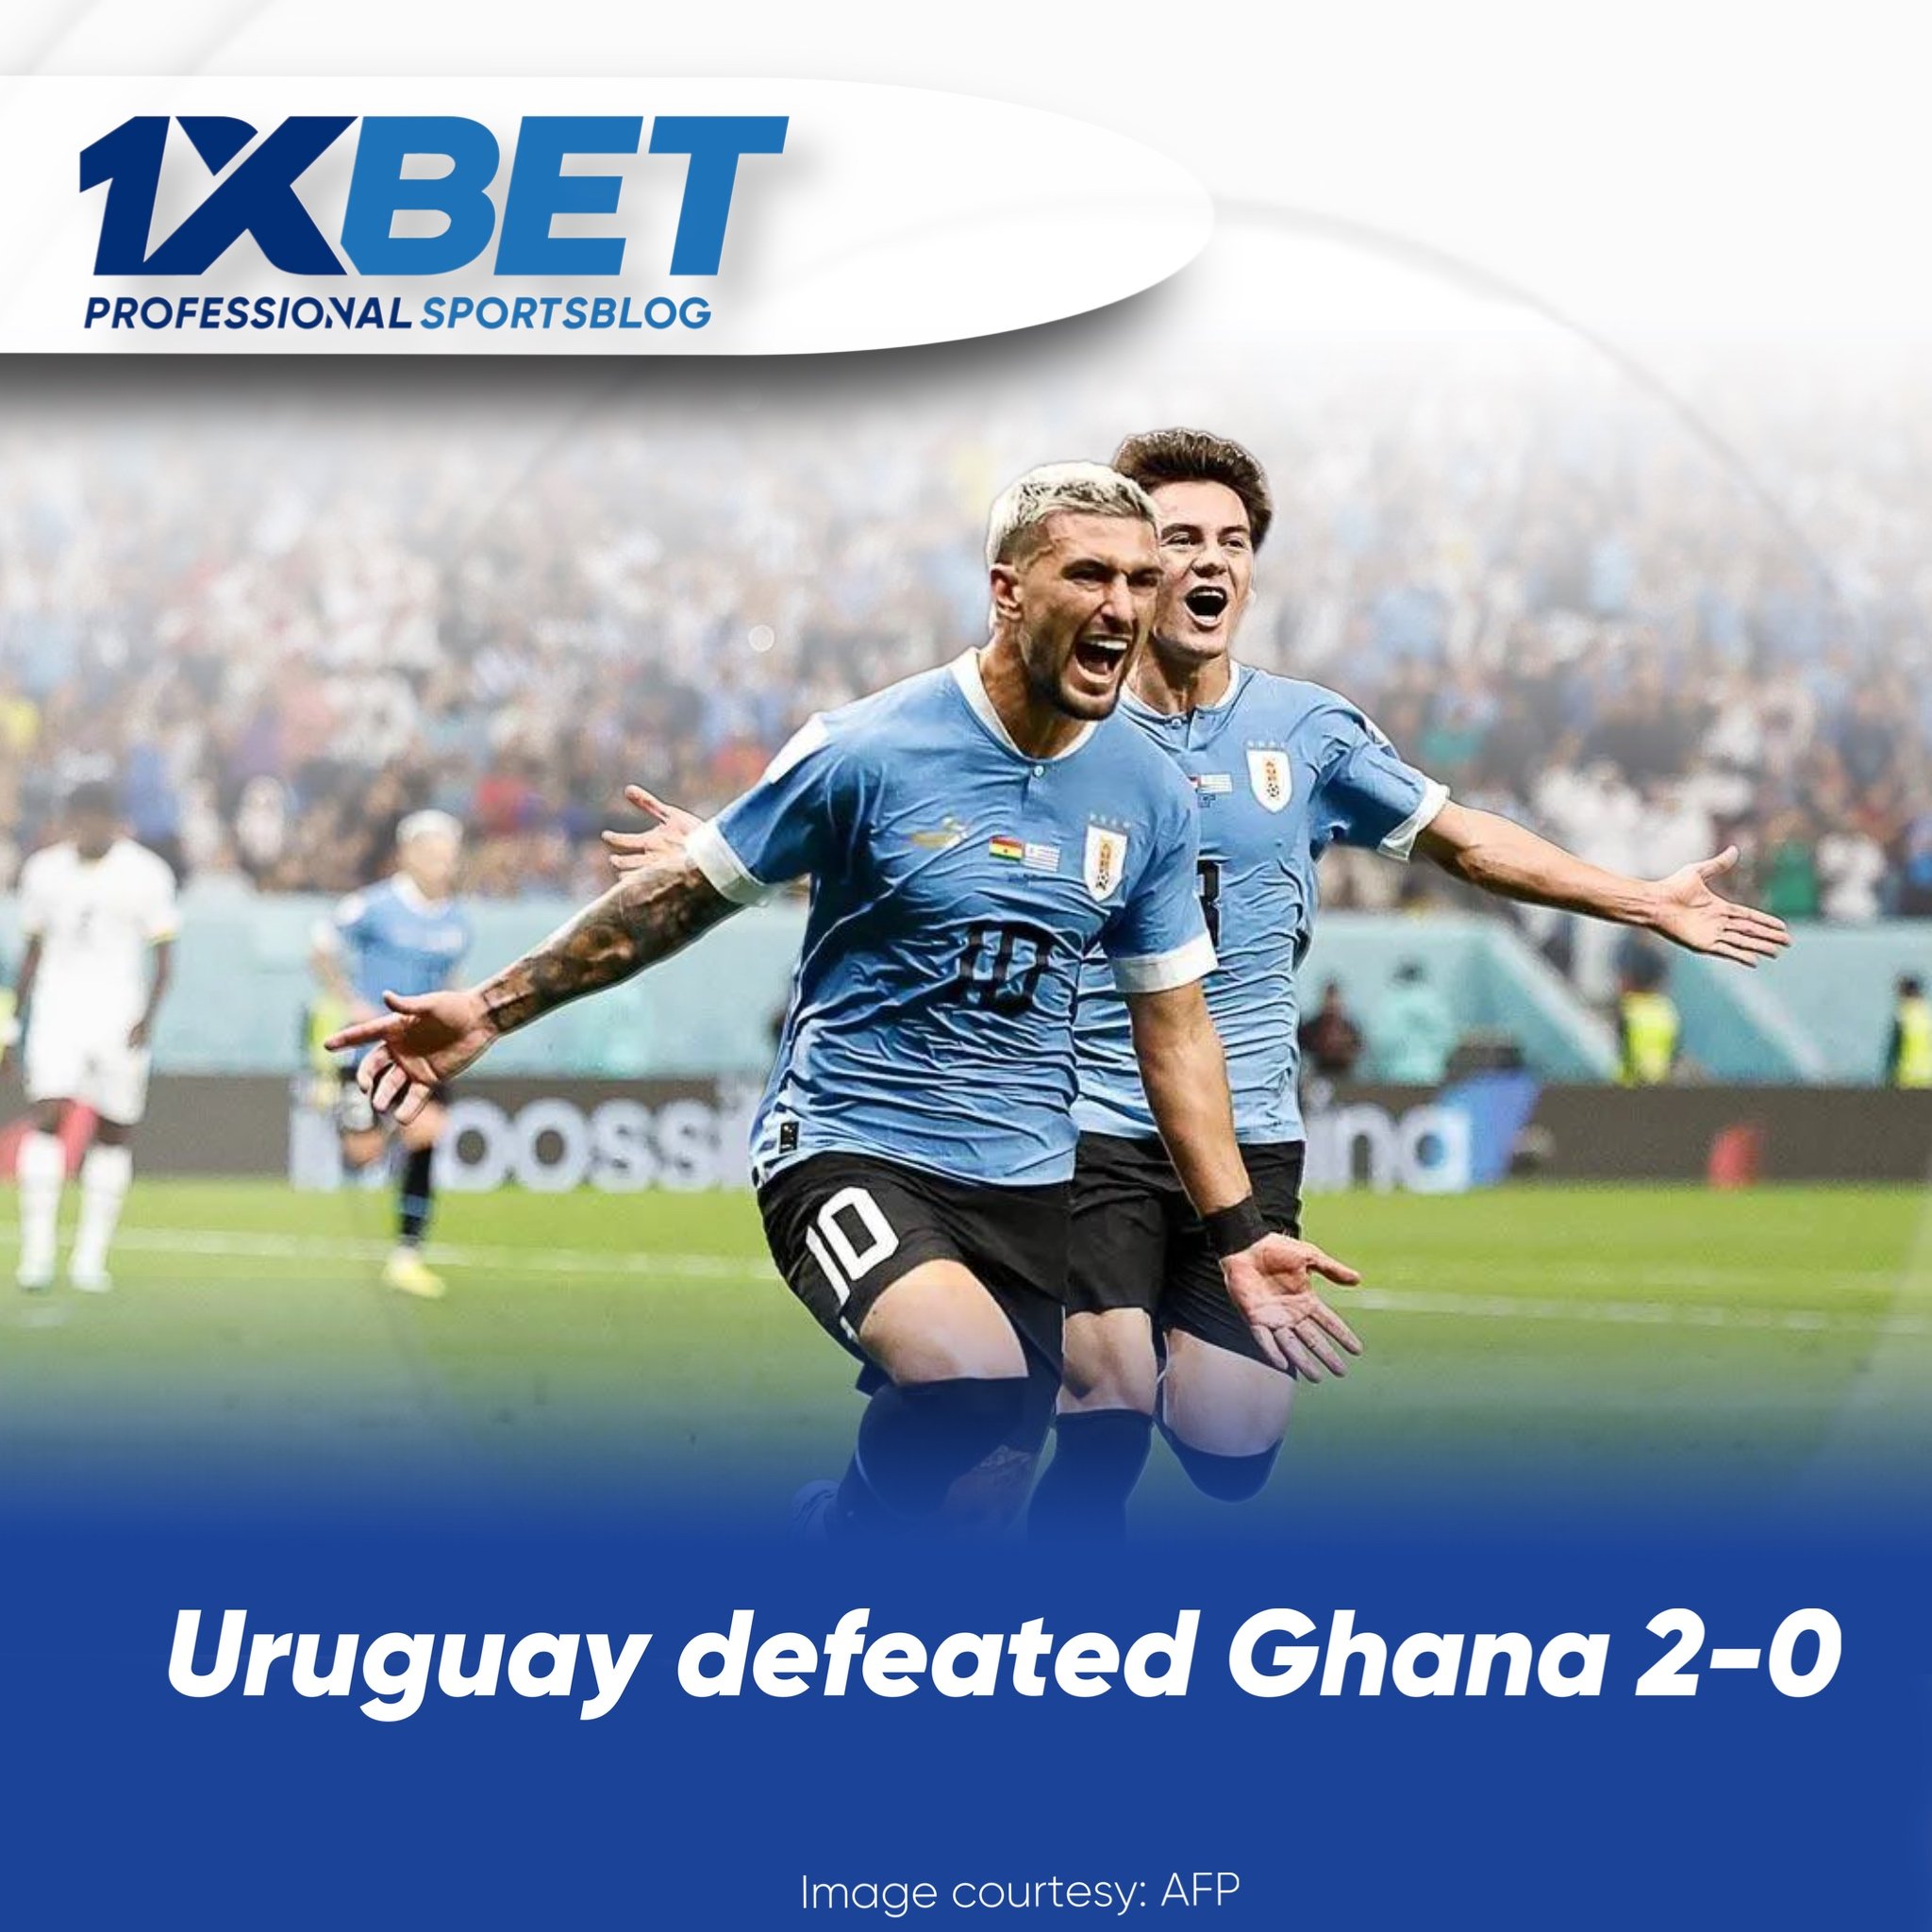 Uruguay defeated Ghana 2-0